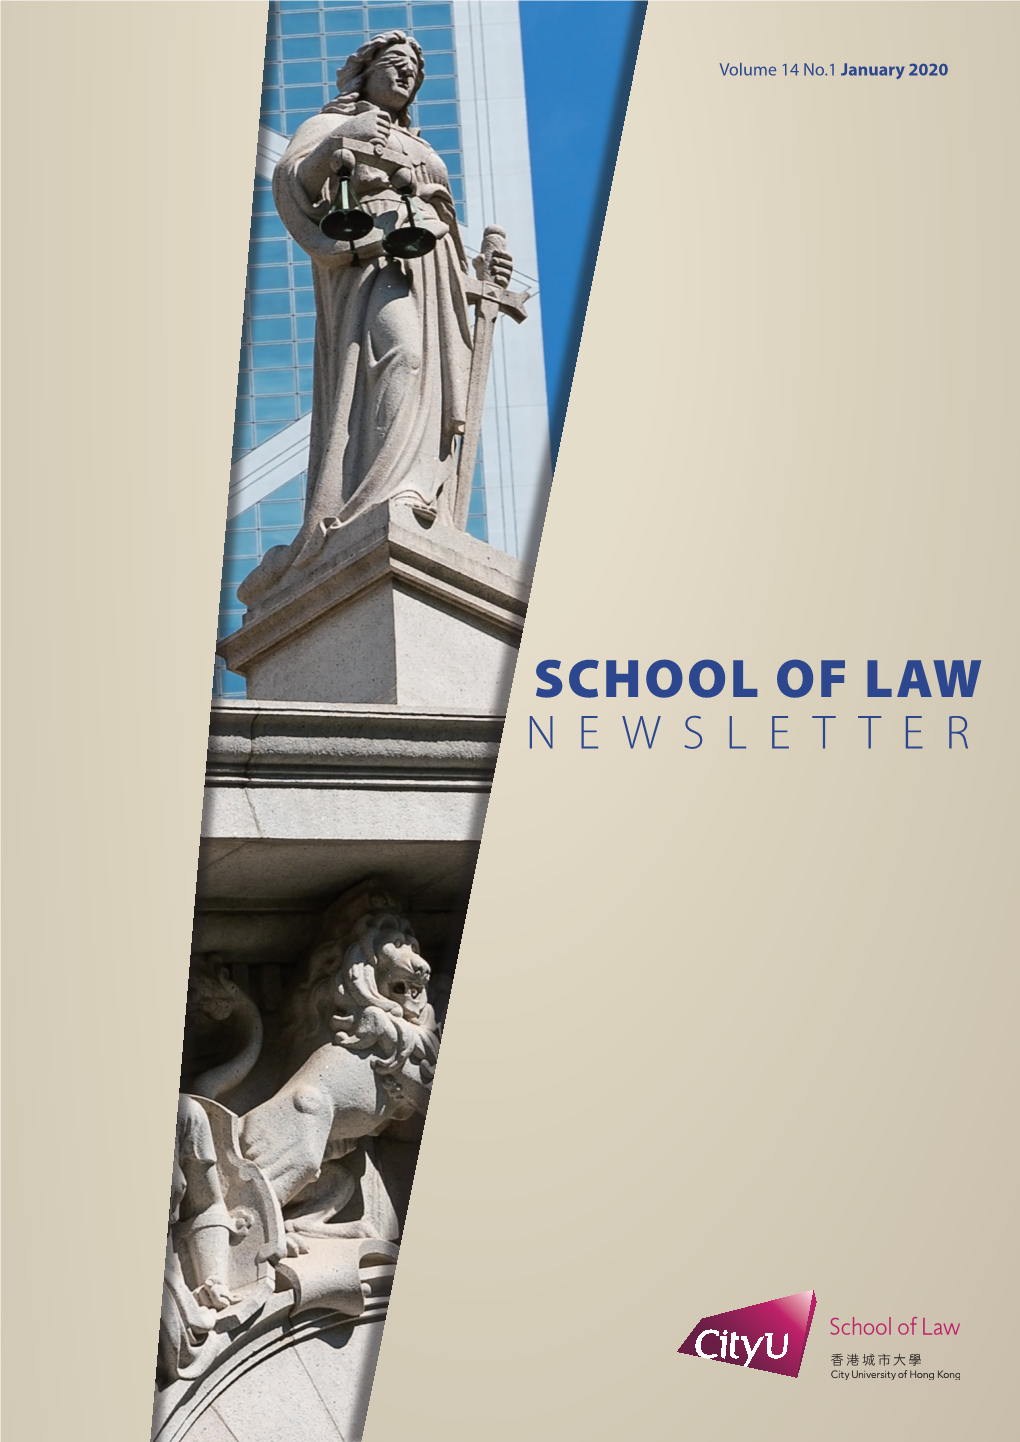 SCHOOL of LAW NEWSLETTER School of Law City University of Hong Kong